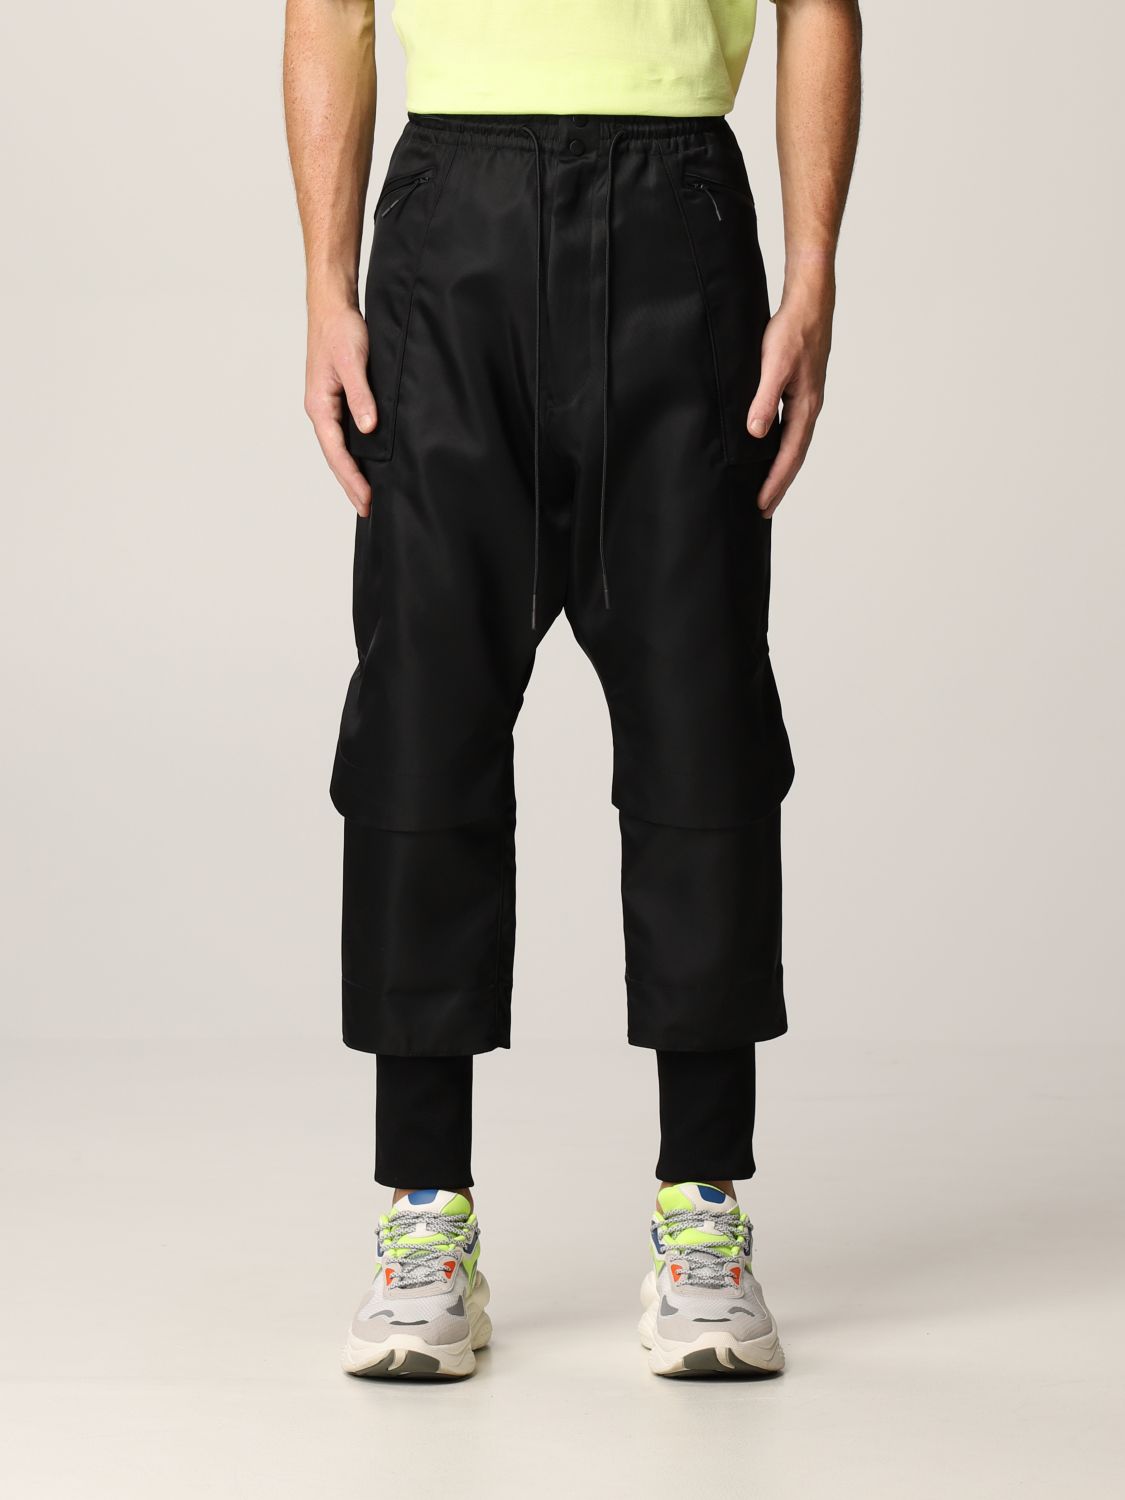 Y-3: pants for man - Black | Y-3 pants HB3433 online on GIGLIO.COM